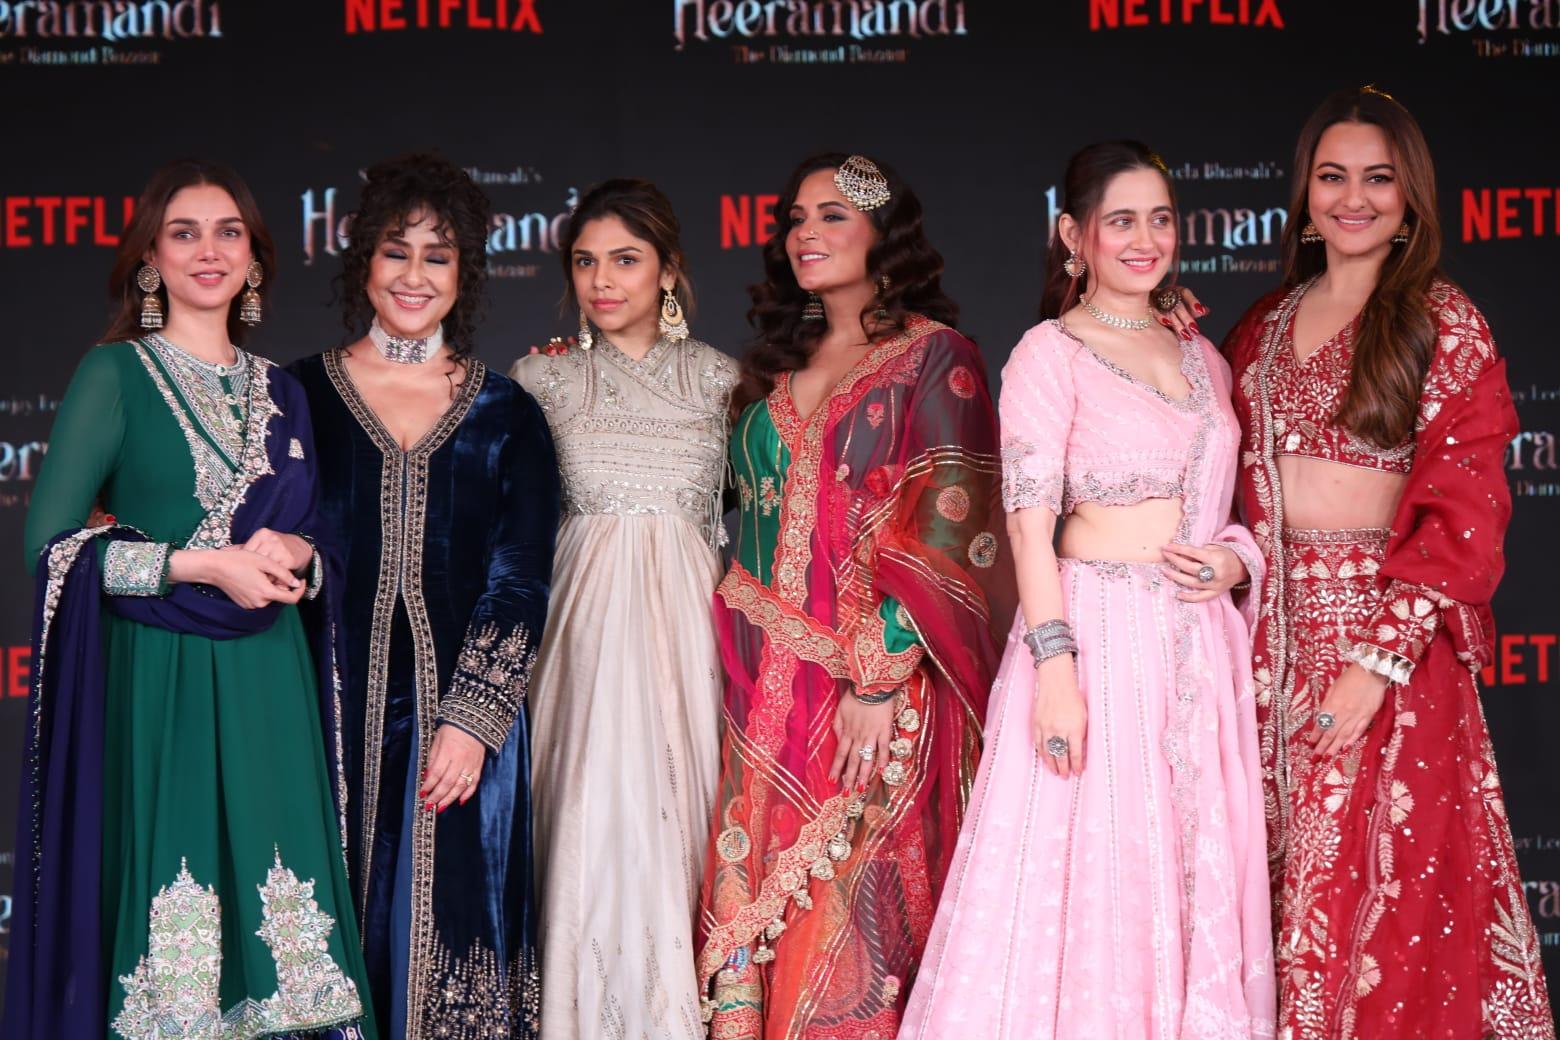 At the grand trailer launch event of Heeramandi, the leading ladies of the series—Manisha Koirala, Sonakshi Sinha, Aditi Rao Hydari, Richa Chadha, Sharmin Segal, and Sanjeeda Shaikh—posed together